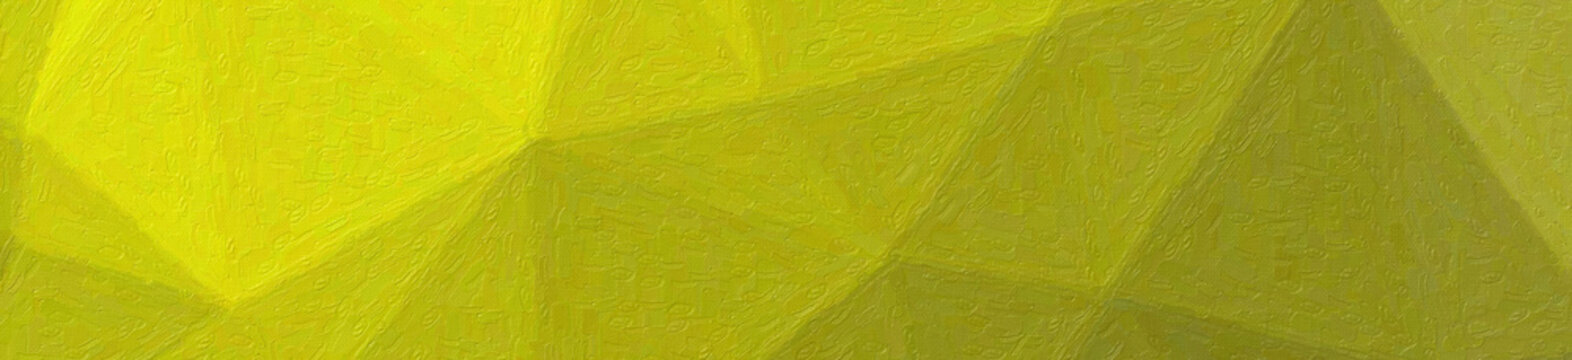 Illustration of lemon yellow and green   Realistic Impasto banner background.